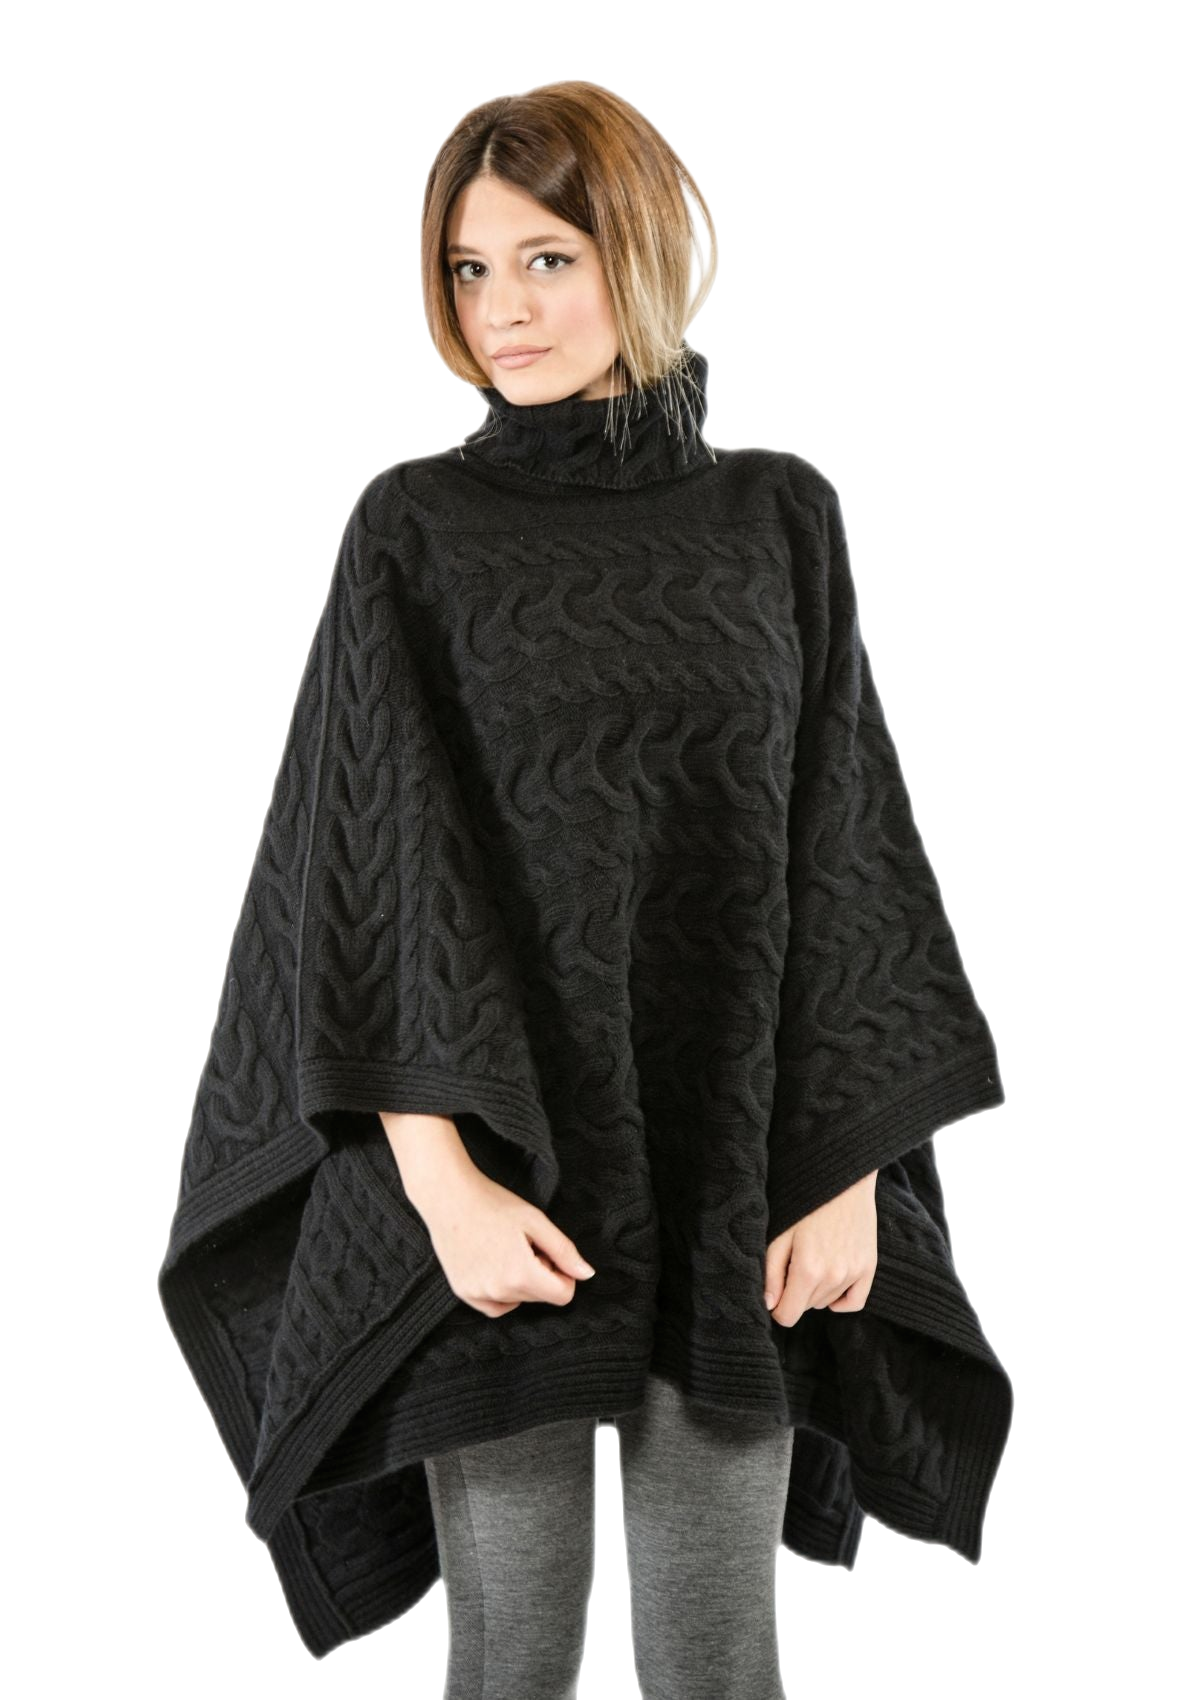 mantella donna in lana merino elegante nera